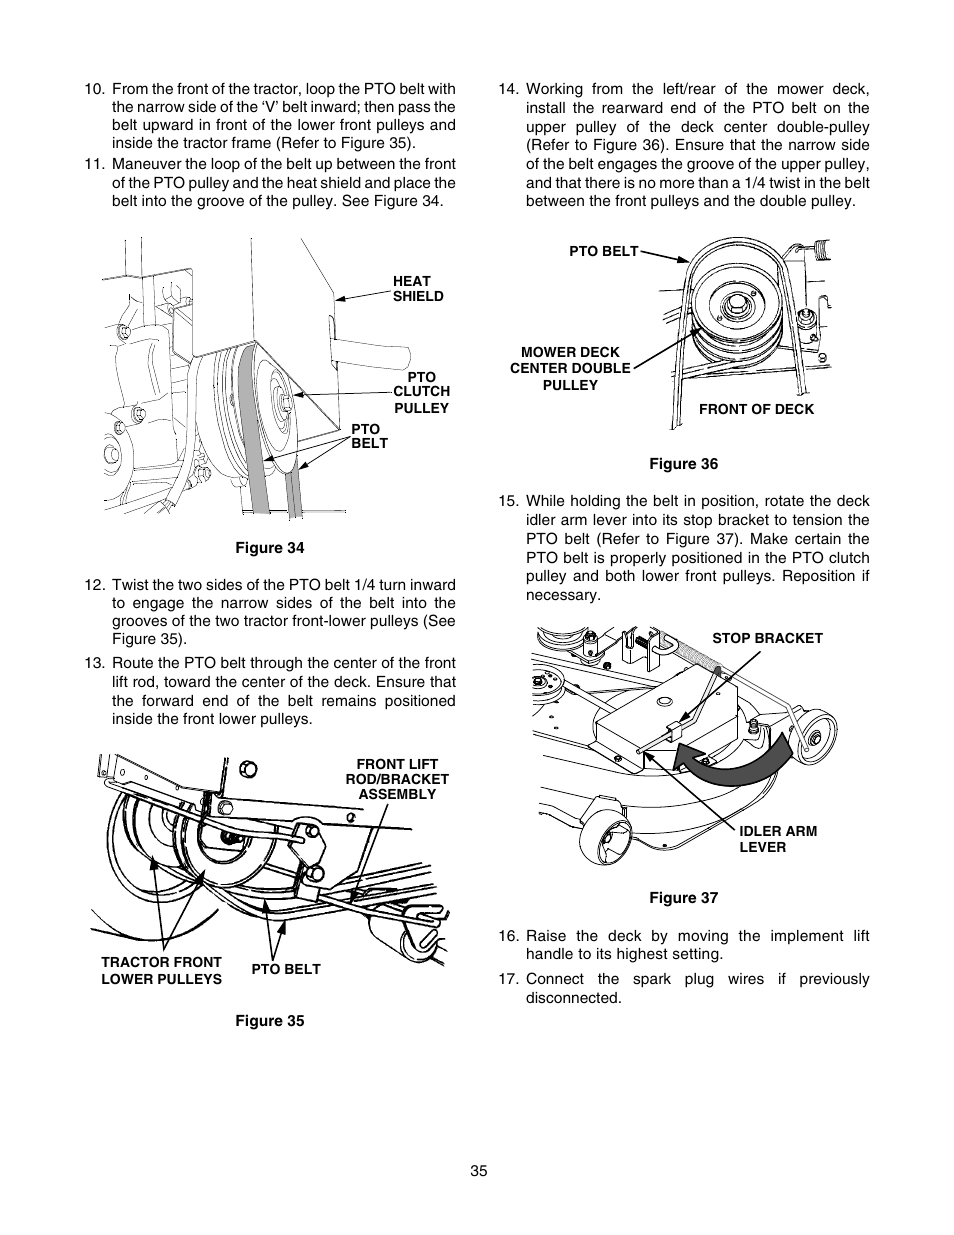 Doerr Electric Motor Lr22132 Wiring Diagram